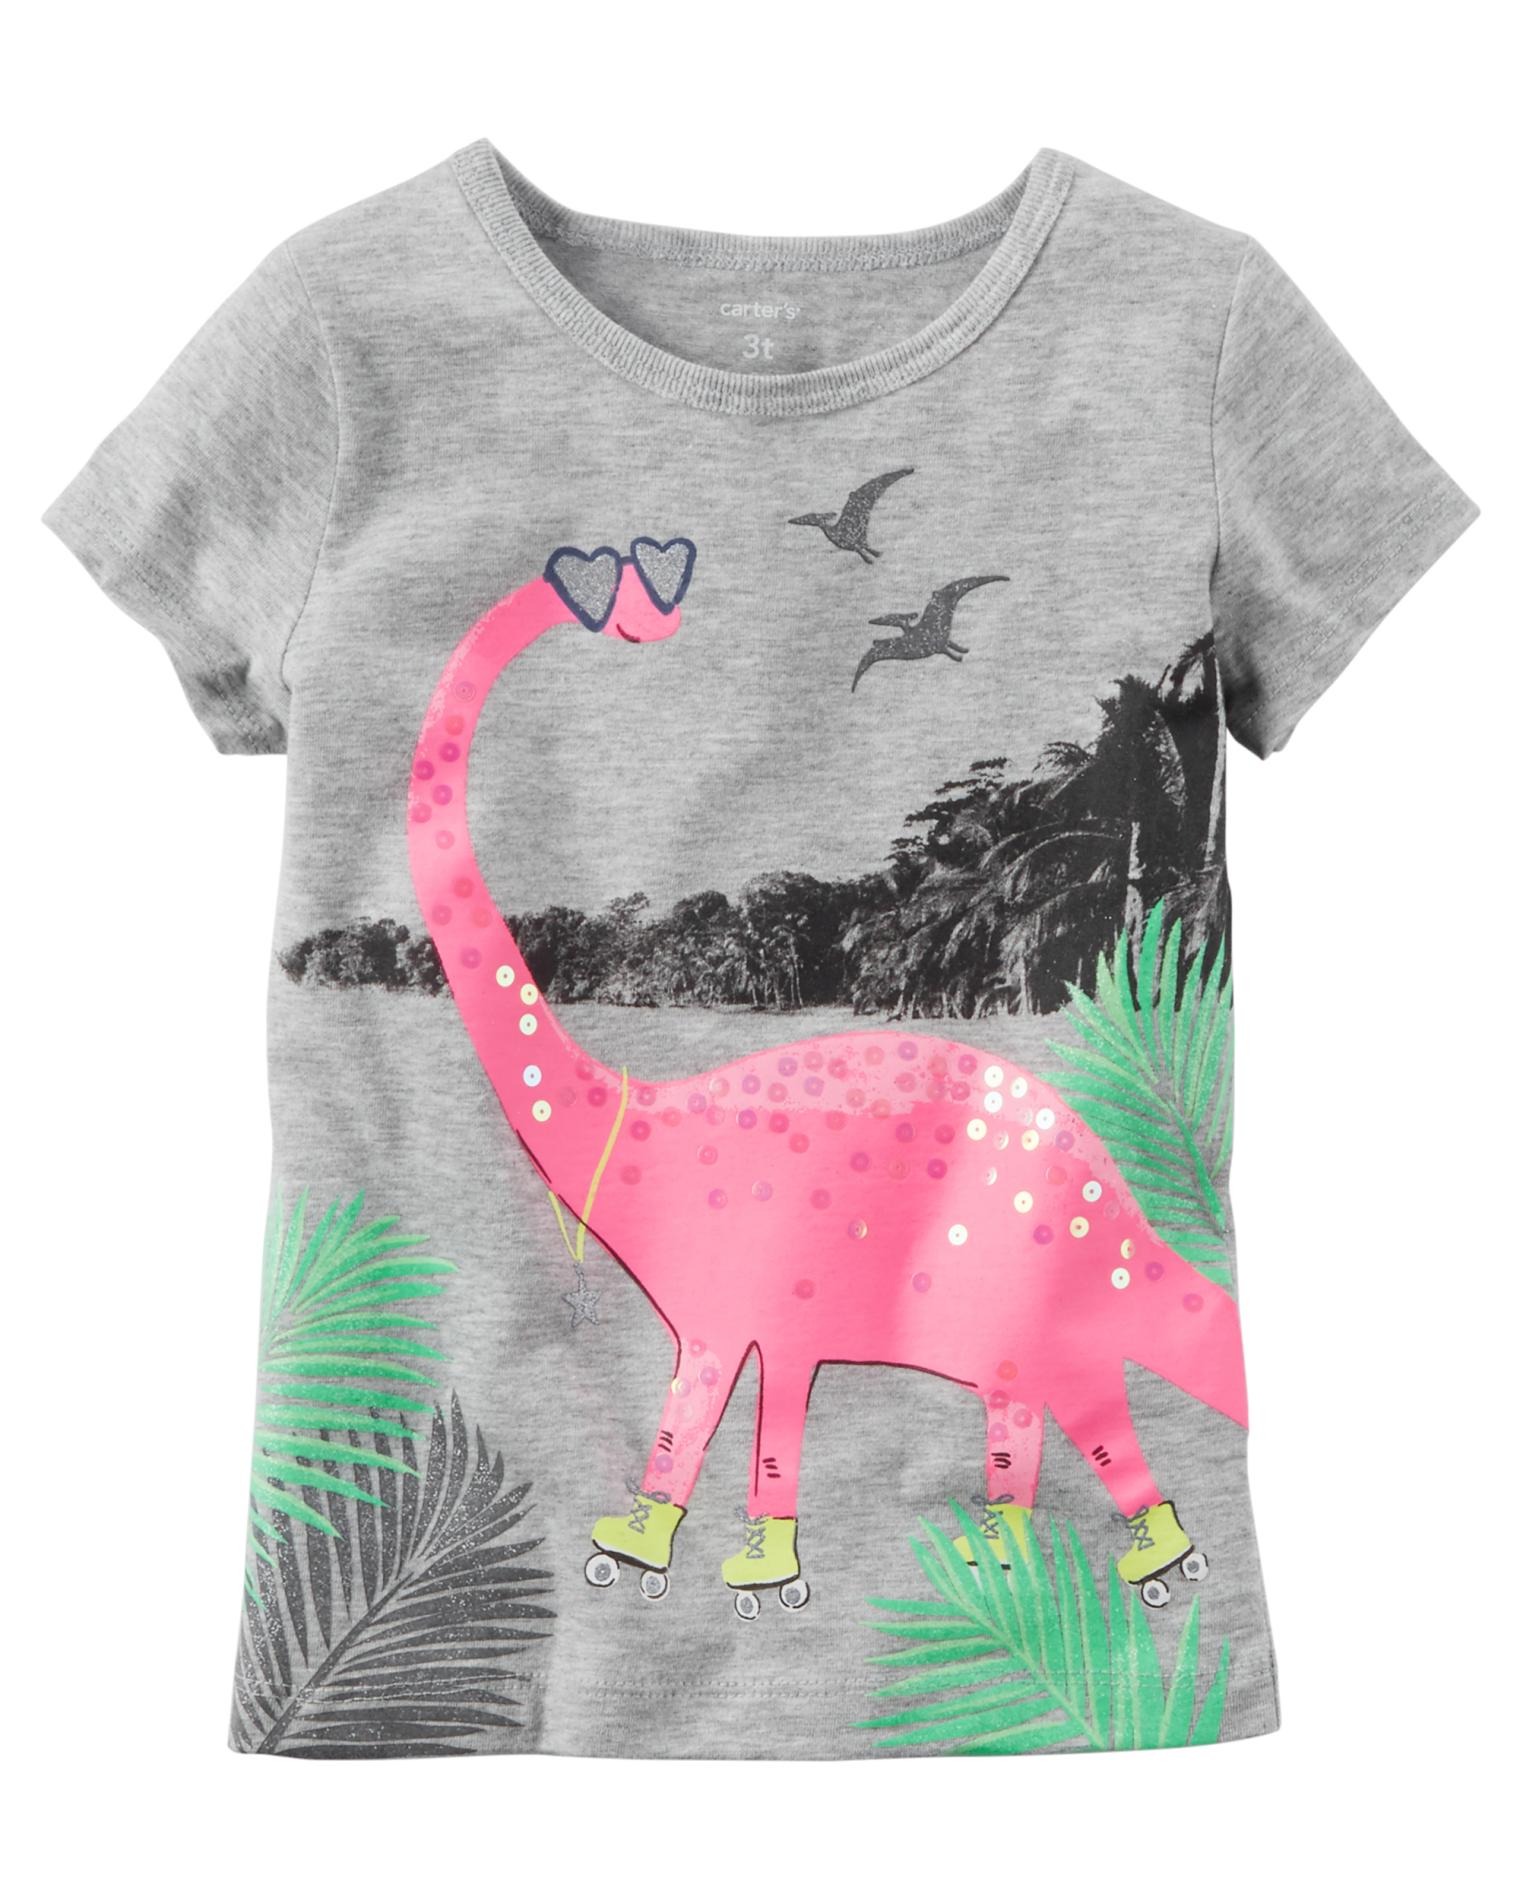 Carter's Girls' Graphic T-Shirt - Dinosaur